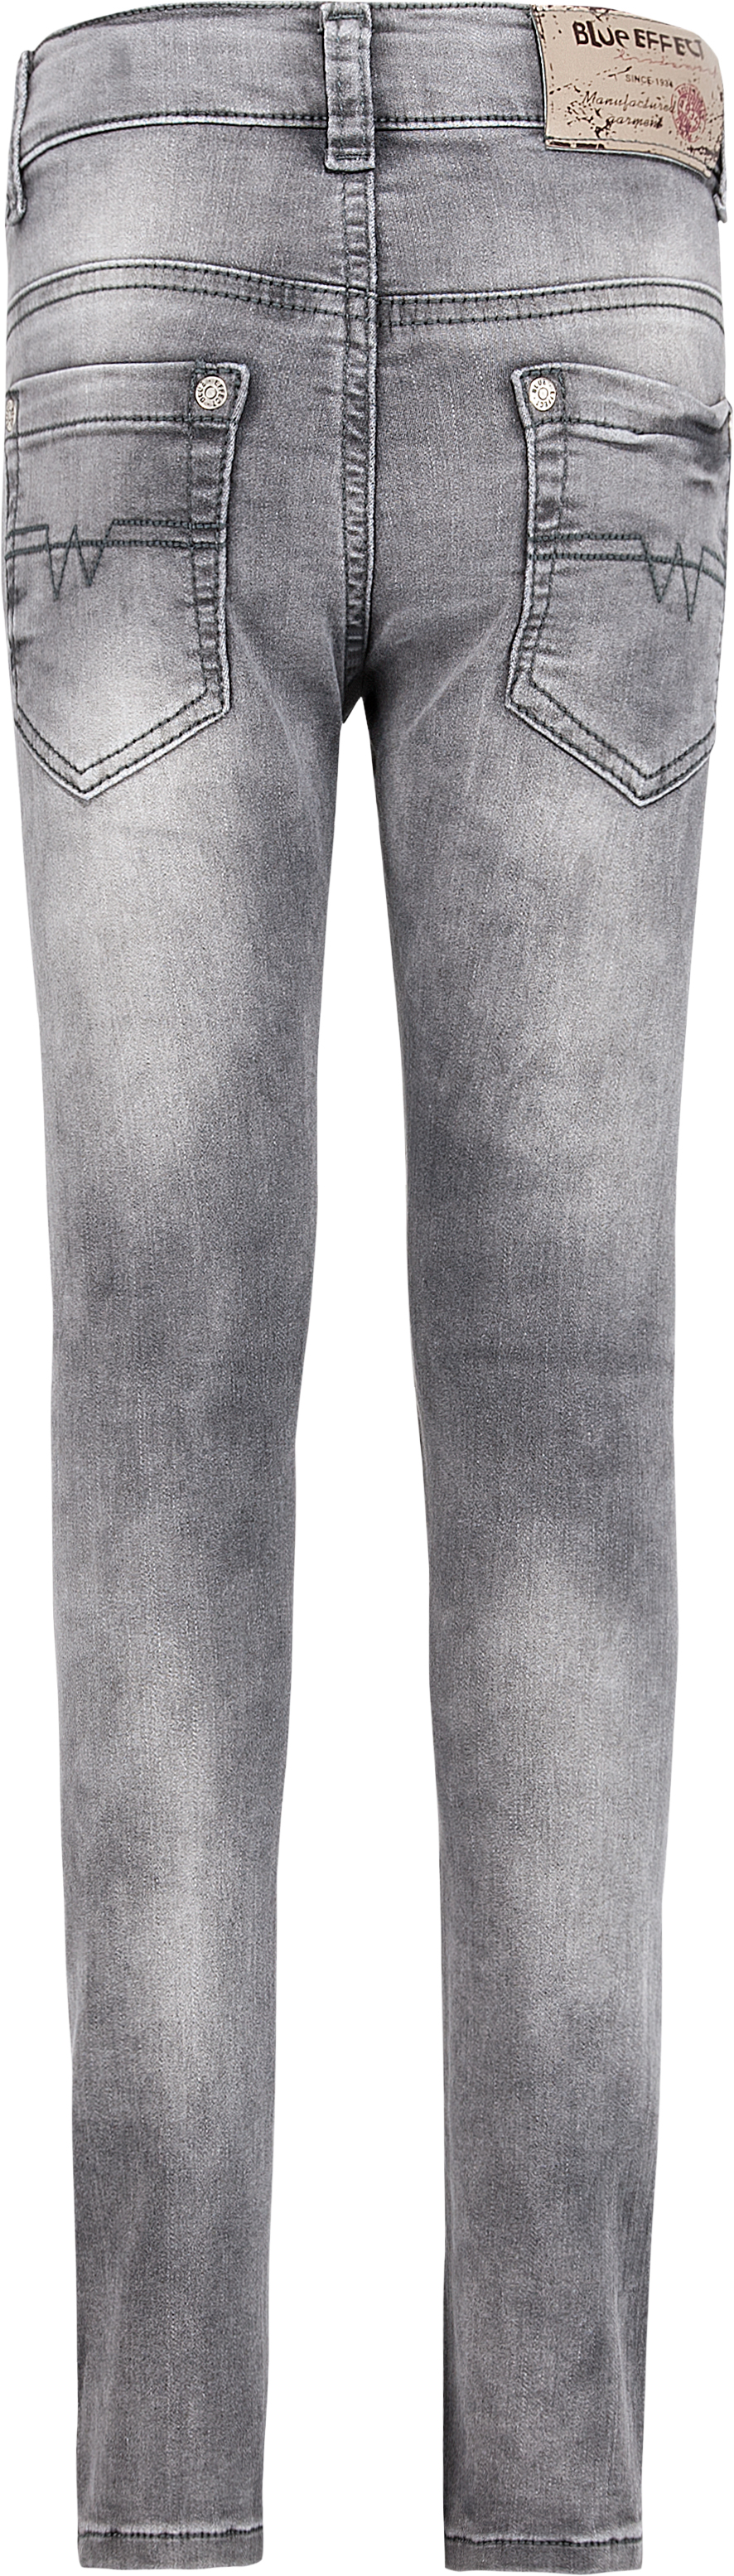 2725-NOS Boys Jeans Super-Slim, Ultrastretch